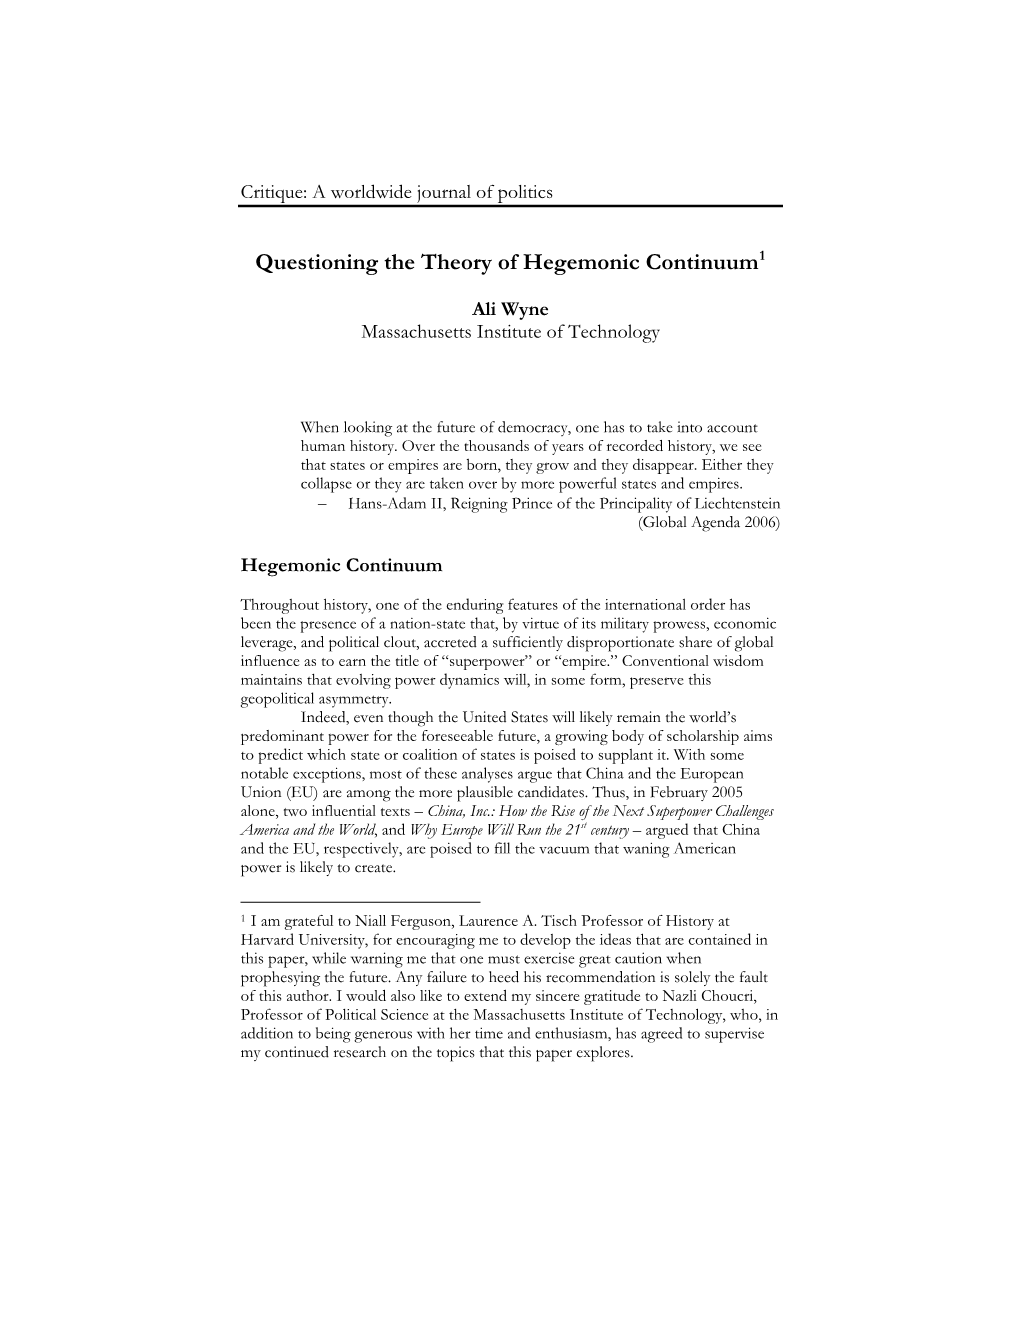 Challenging the Theory of Hegemonic Continuum